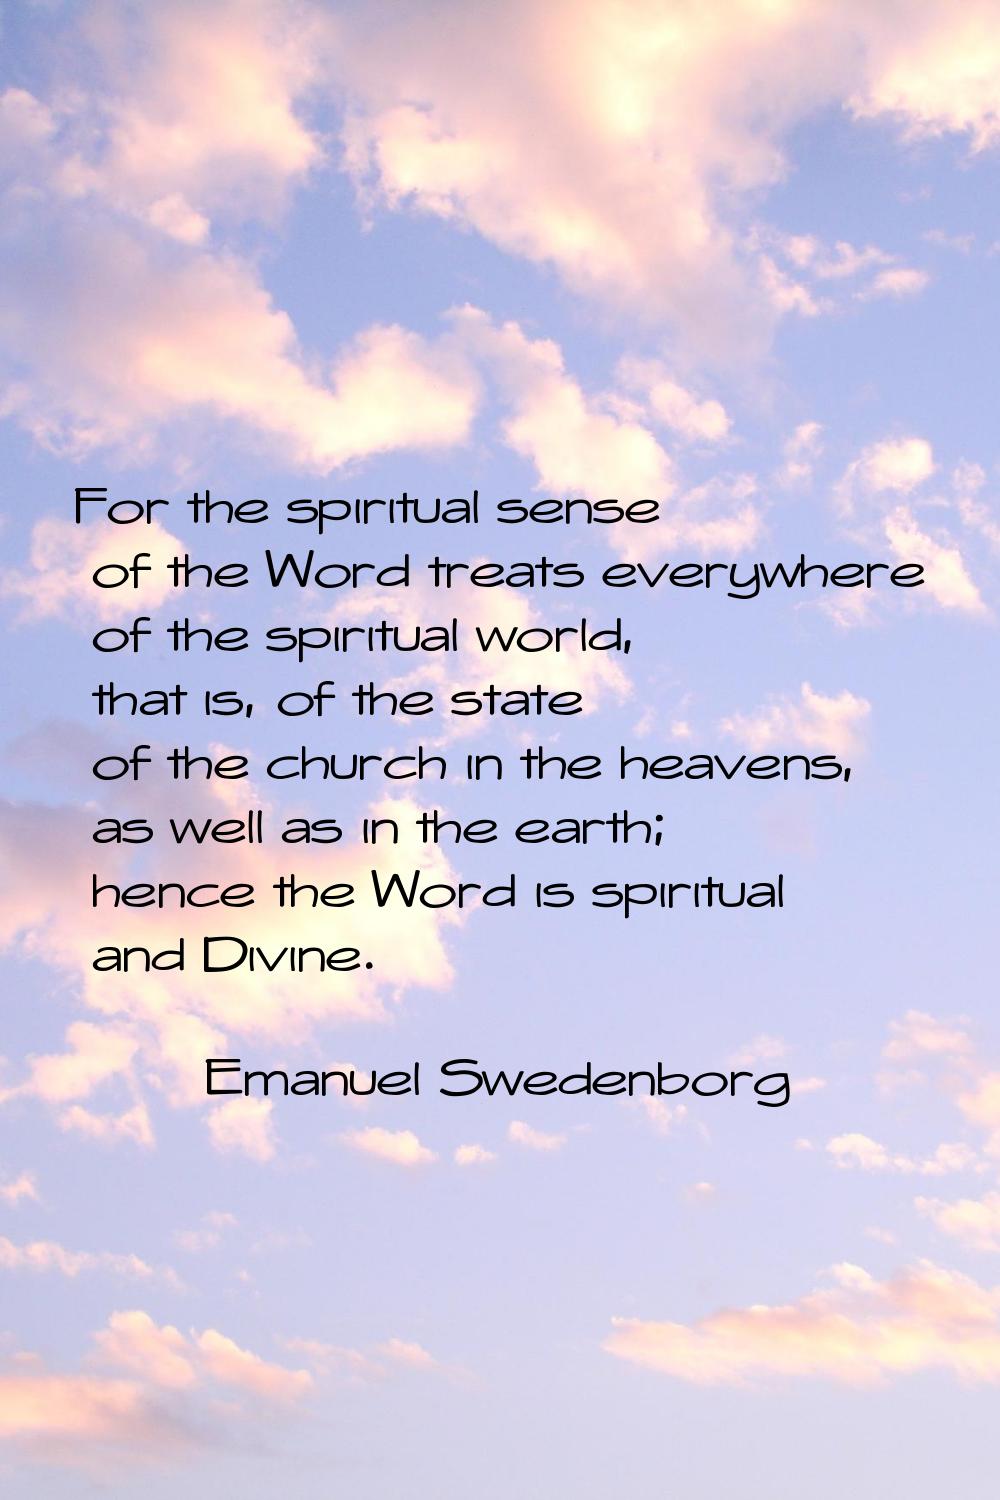 For the spiritual sense of the Word treats everywhere of the spiritual world, that is, of the state